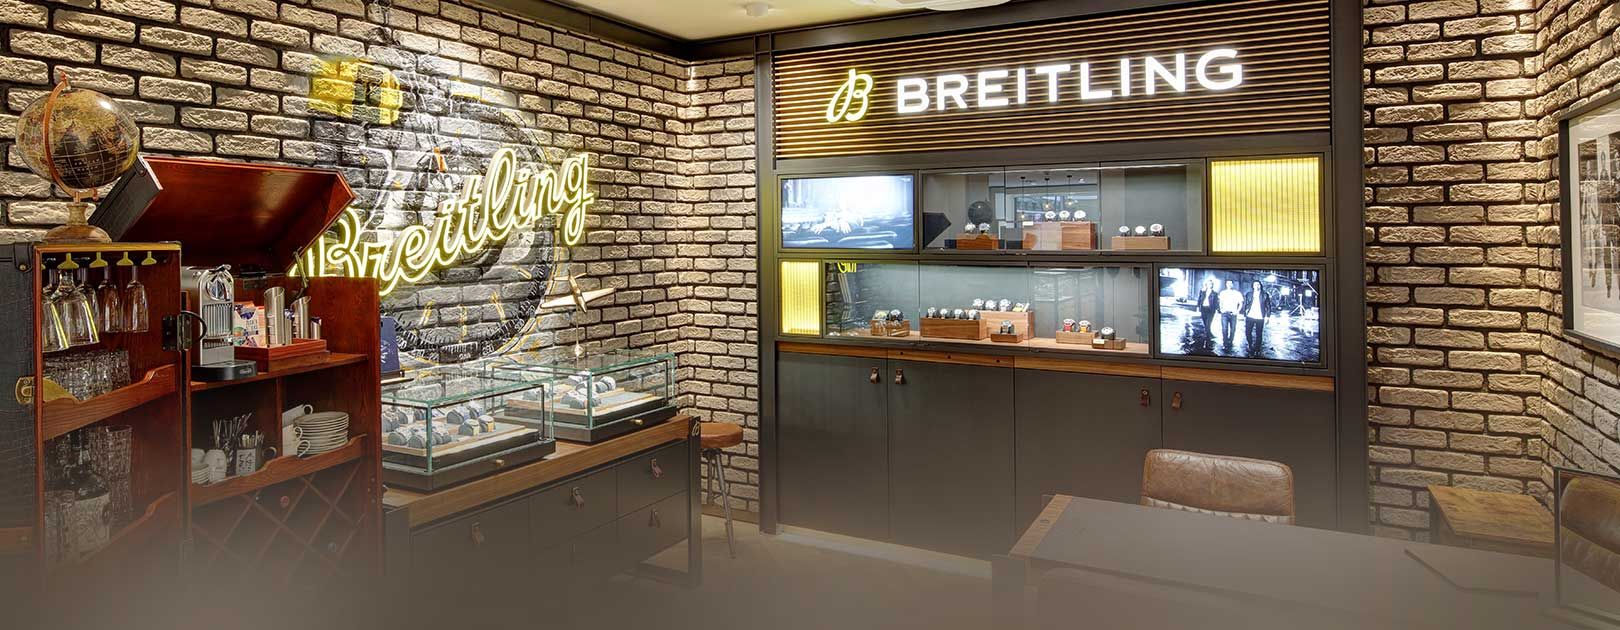 Uhren-Breitling-header-image